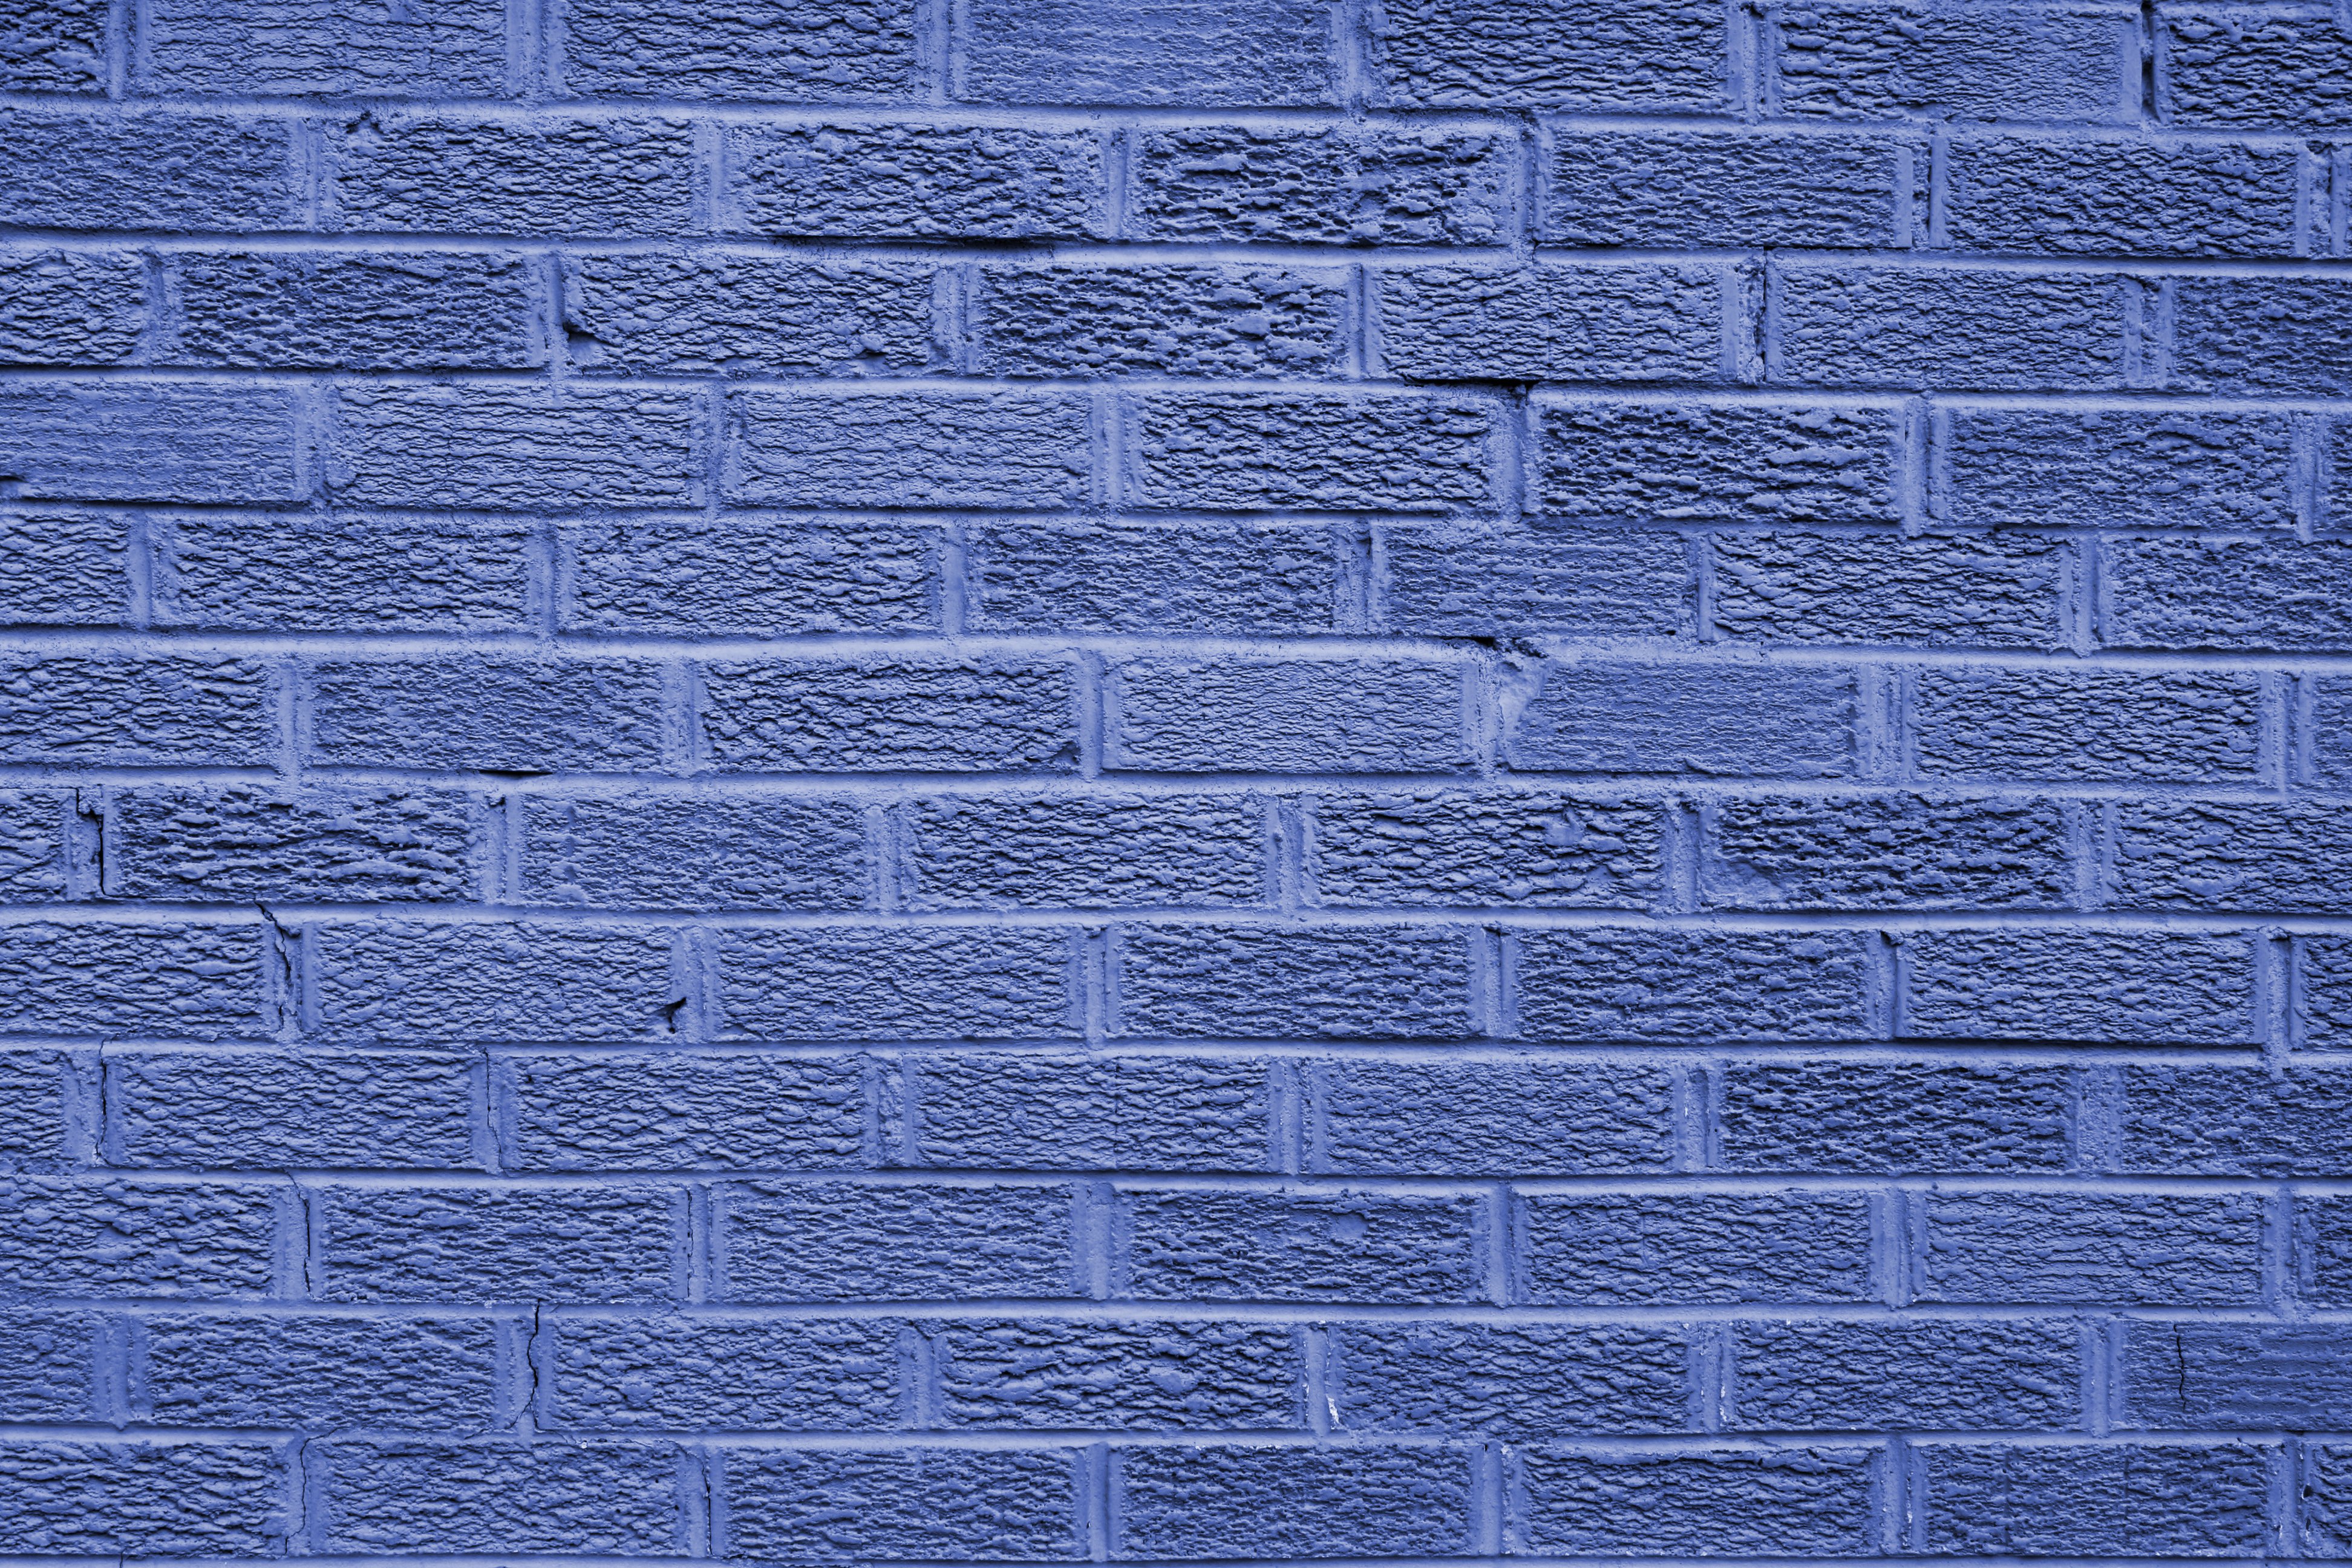 Brick wall textures for design — Картинки и Рисунки